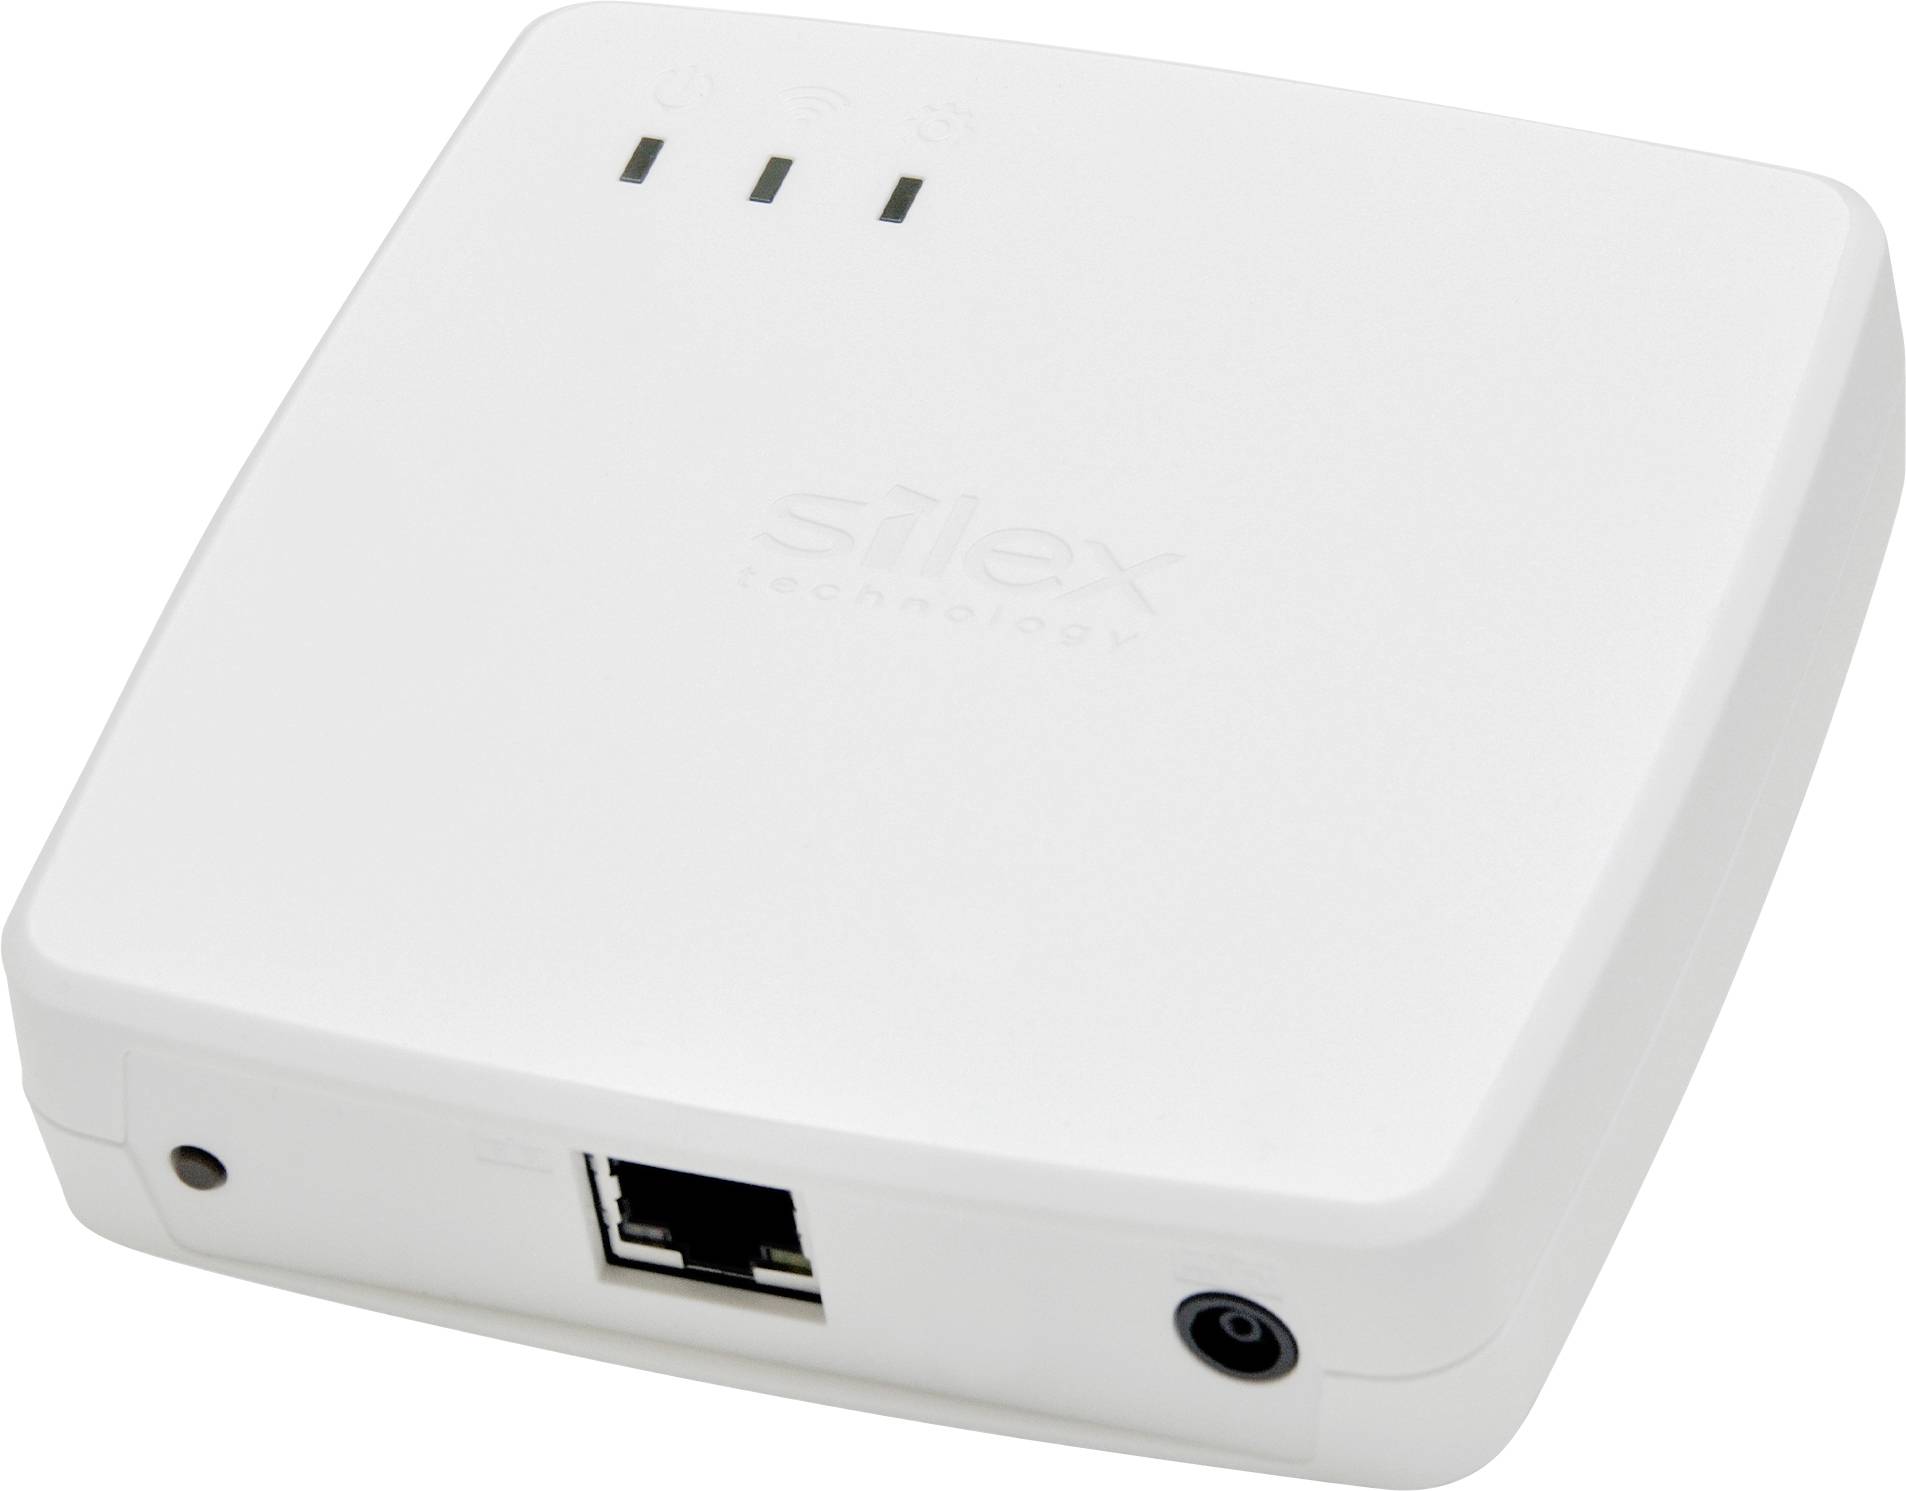 SILEX TECHNOLOGY SILEX BR-500AC Wireless Bridge - Enterprise Security 802.1x - WPA3 - Gigabit LAN -